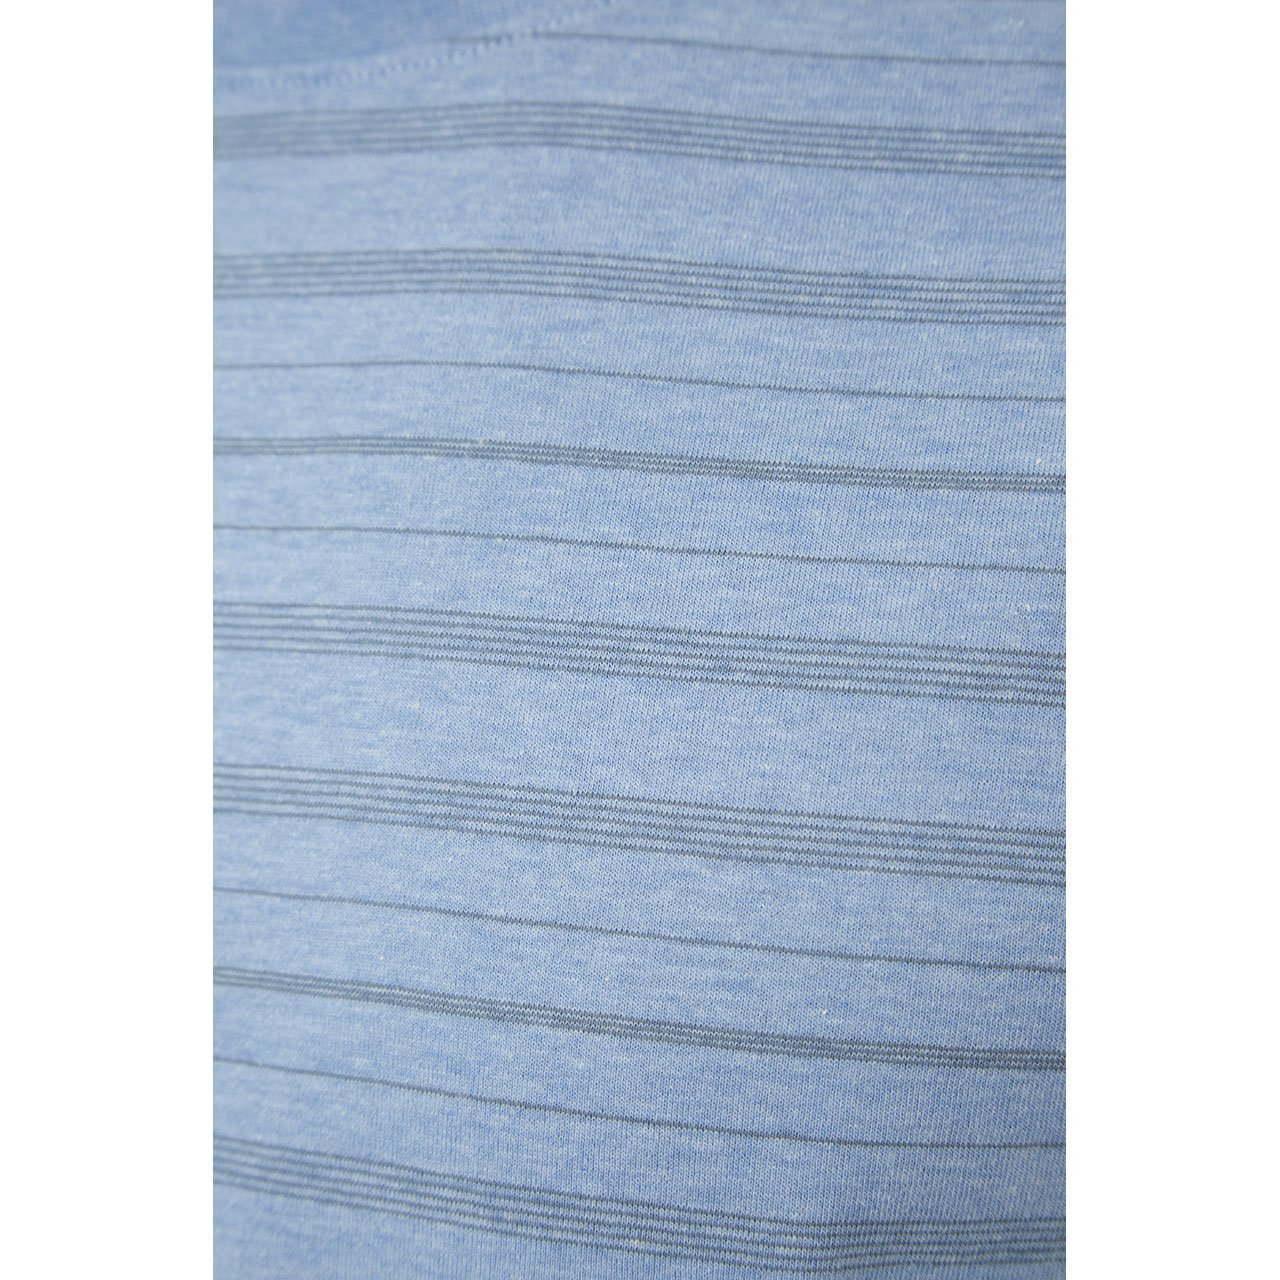 PX Clothing Men's Oscar Striped Tee in Blue - Men - Apparel - Shirts - T-Shirts - Benn~Burry